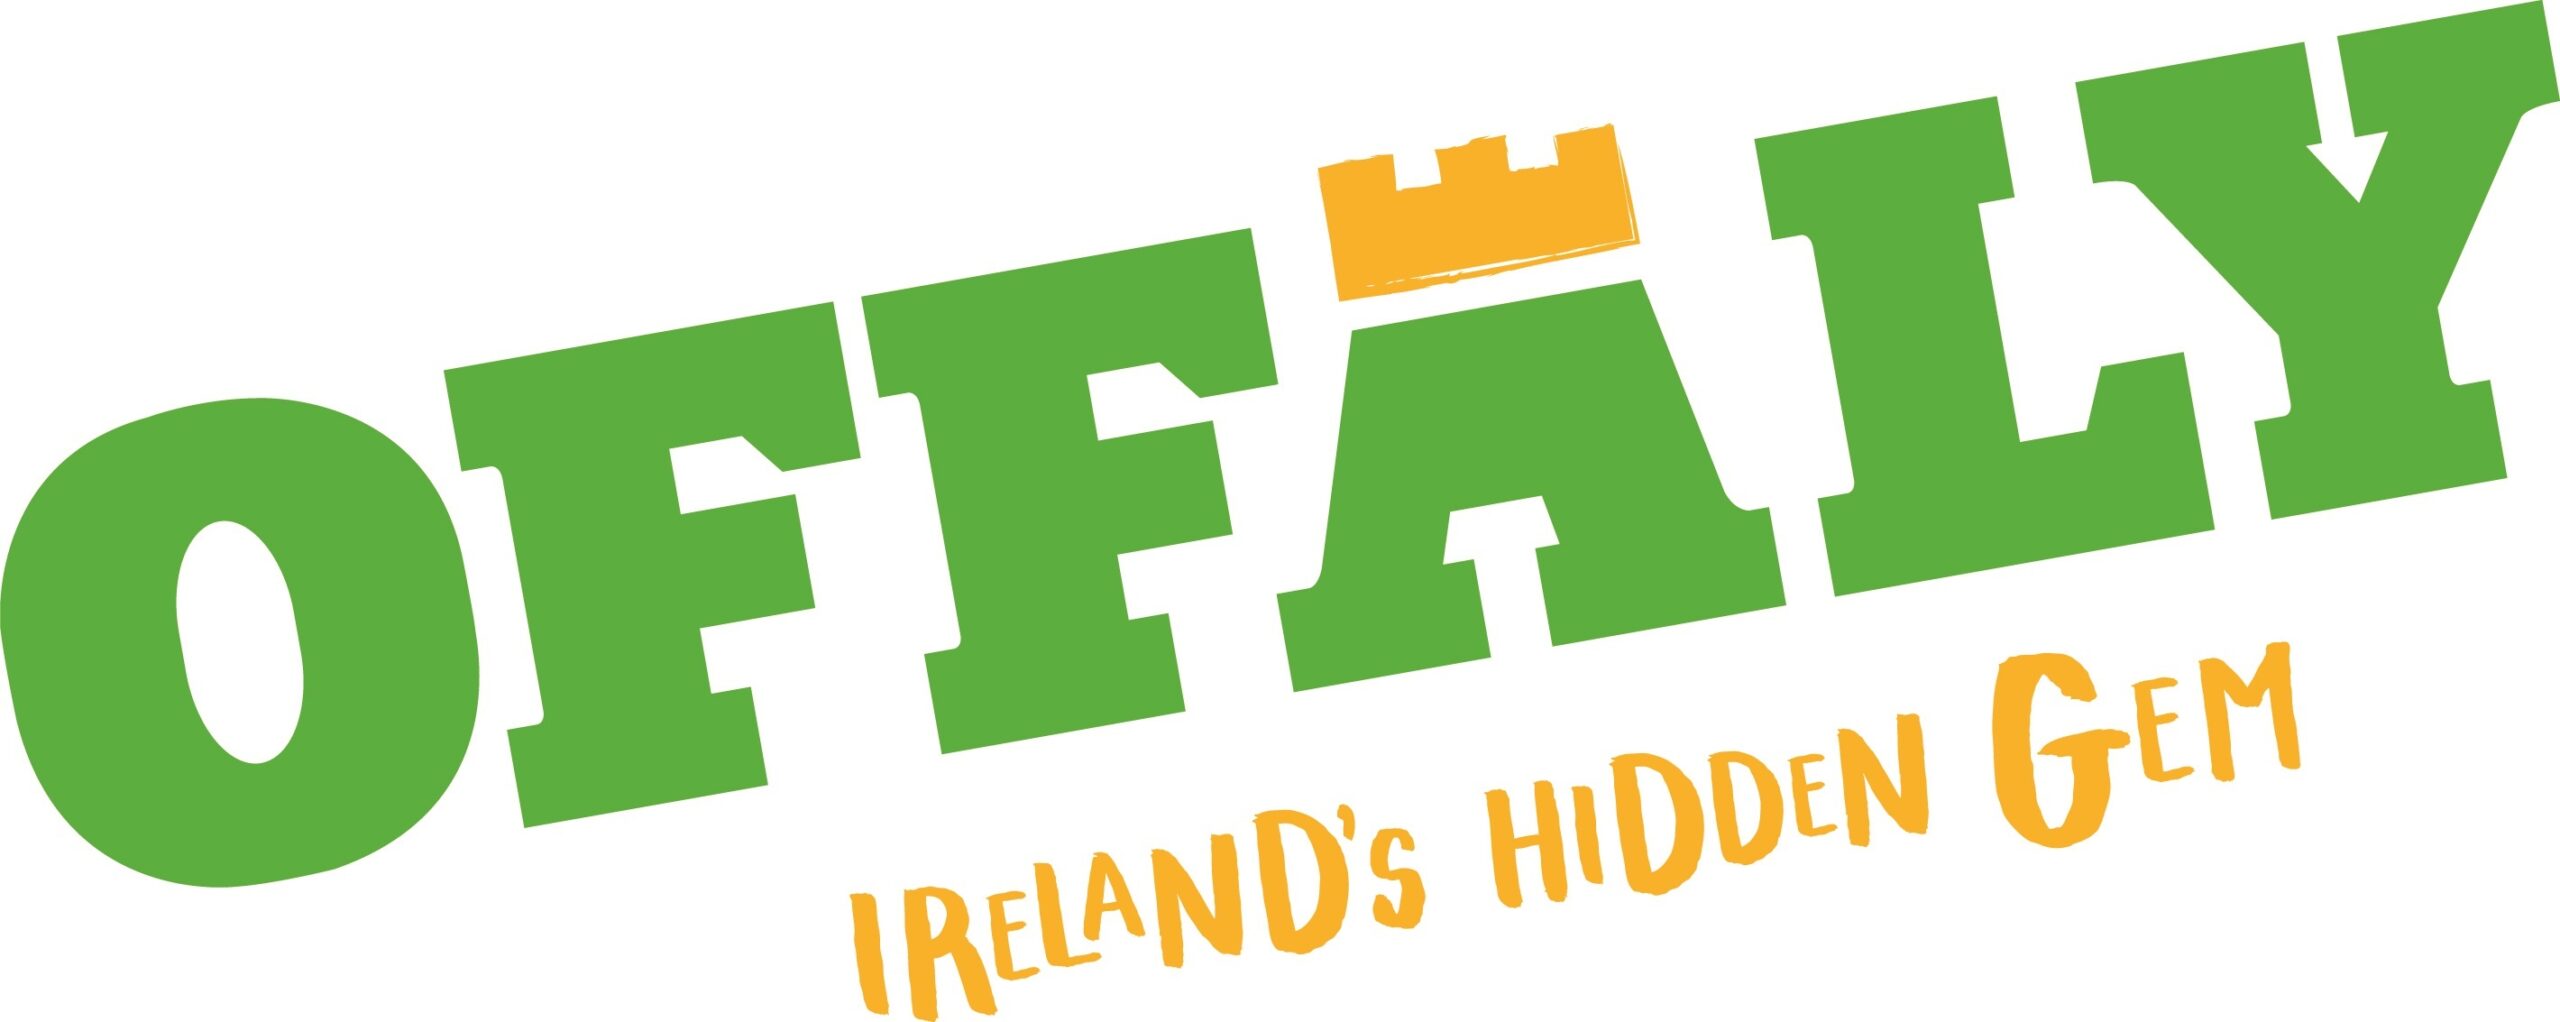 Offaly Ireland's Hidden Gem logo